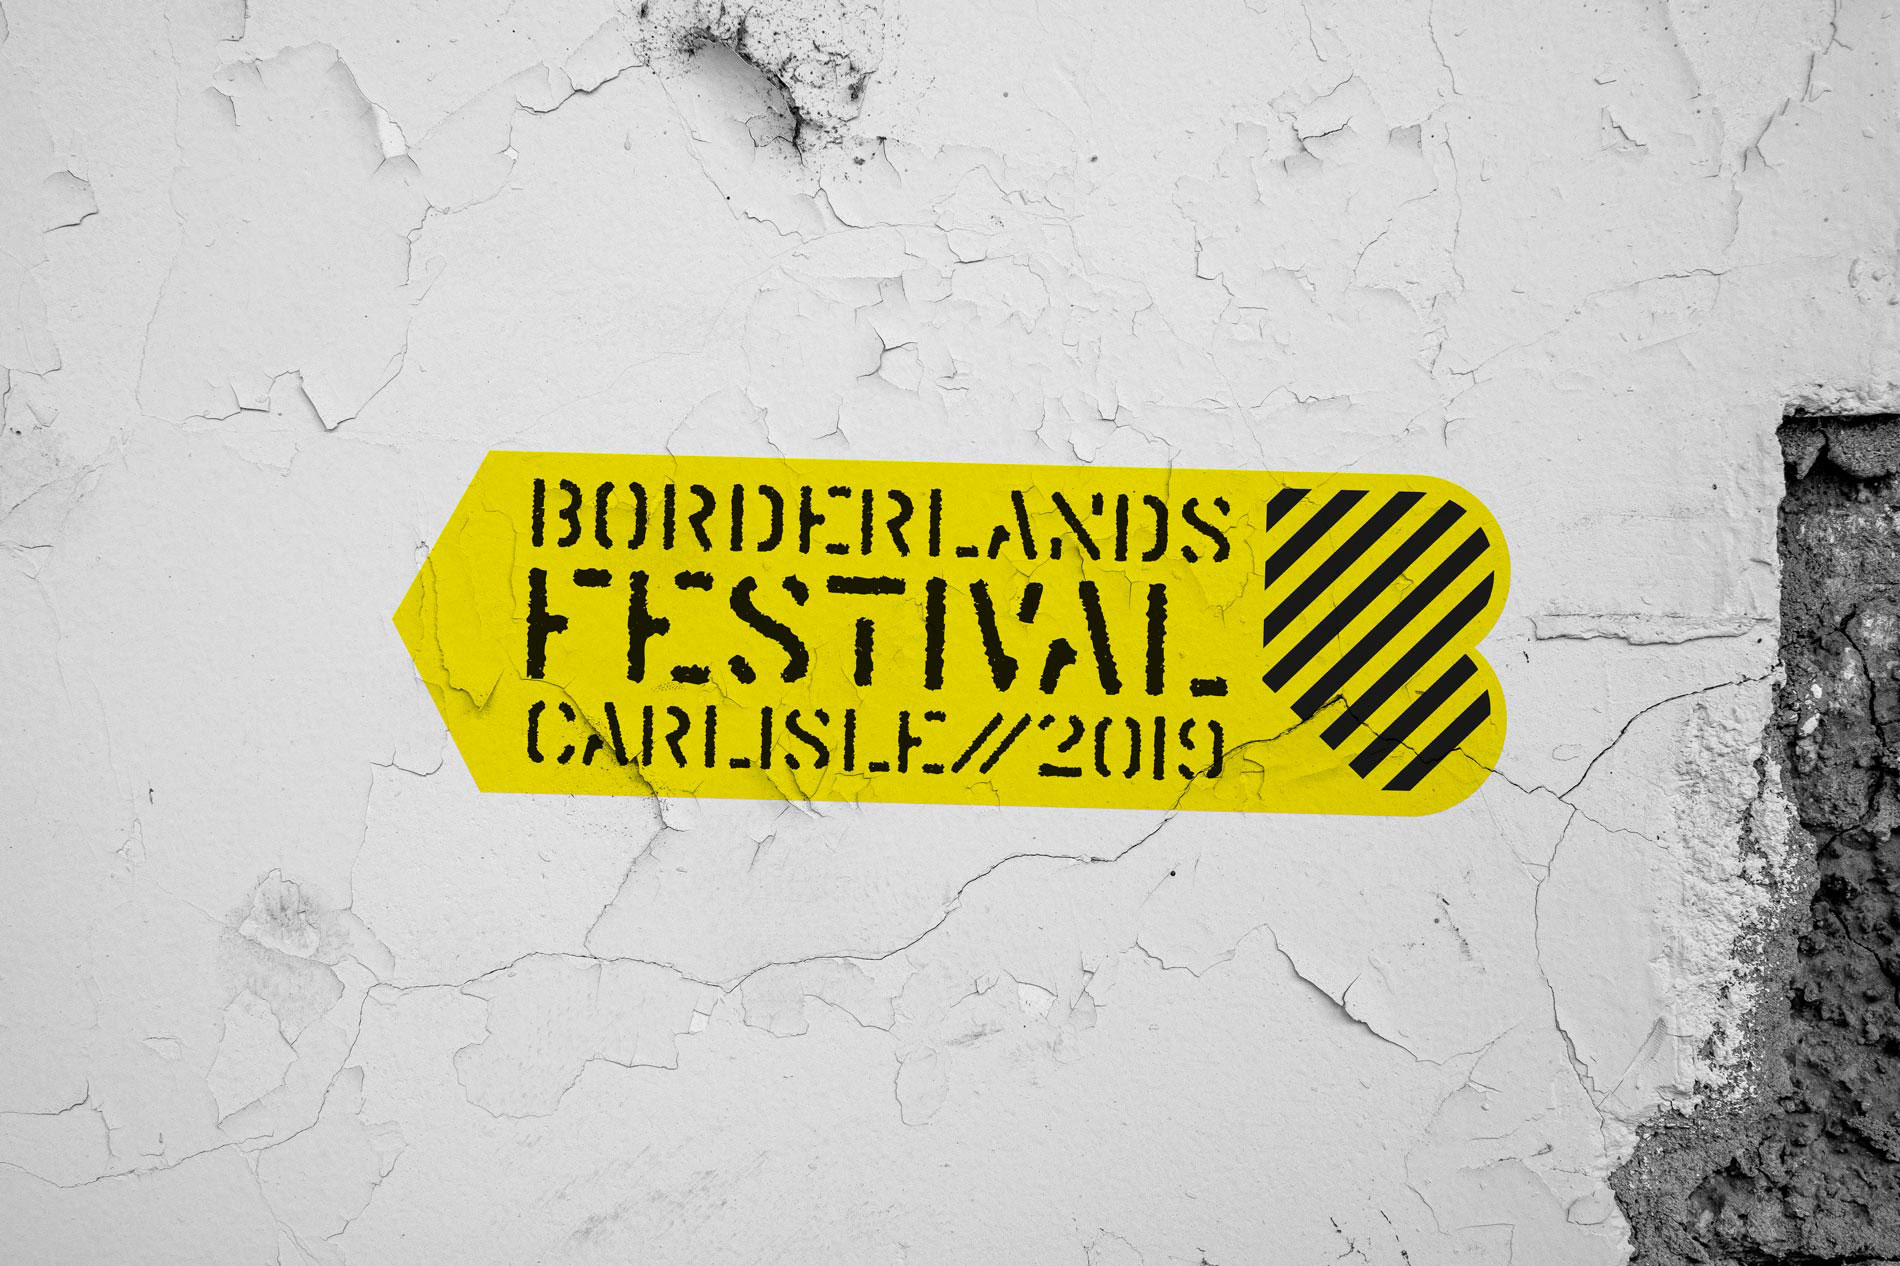 Eden Arts Borderlands 2019 Brand Identity Concepts Carlisle